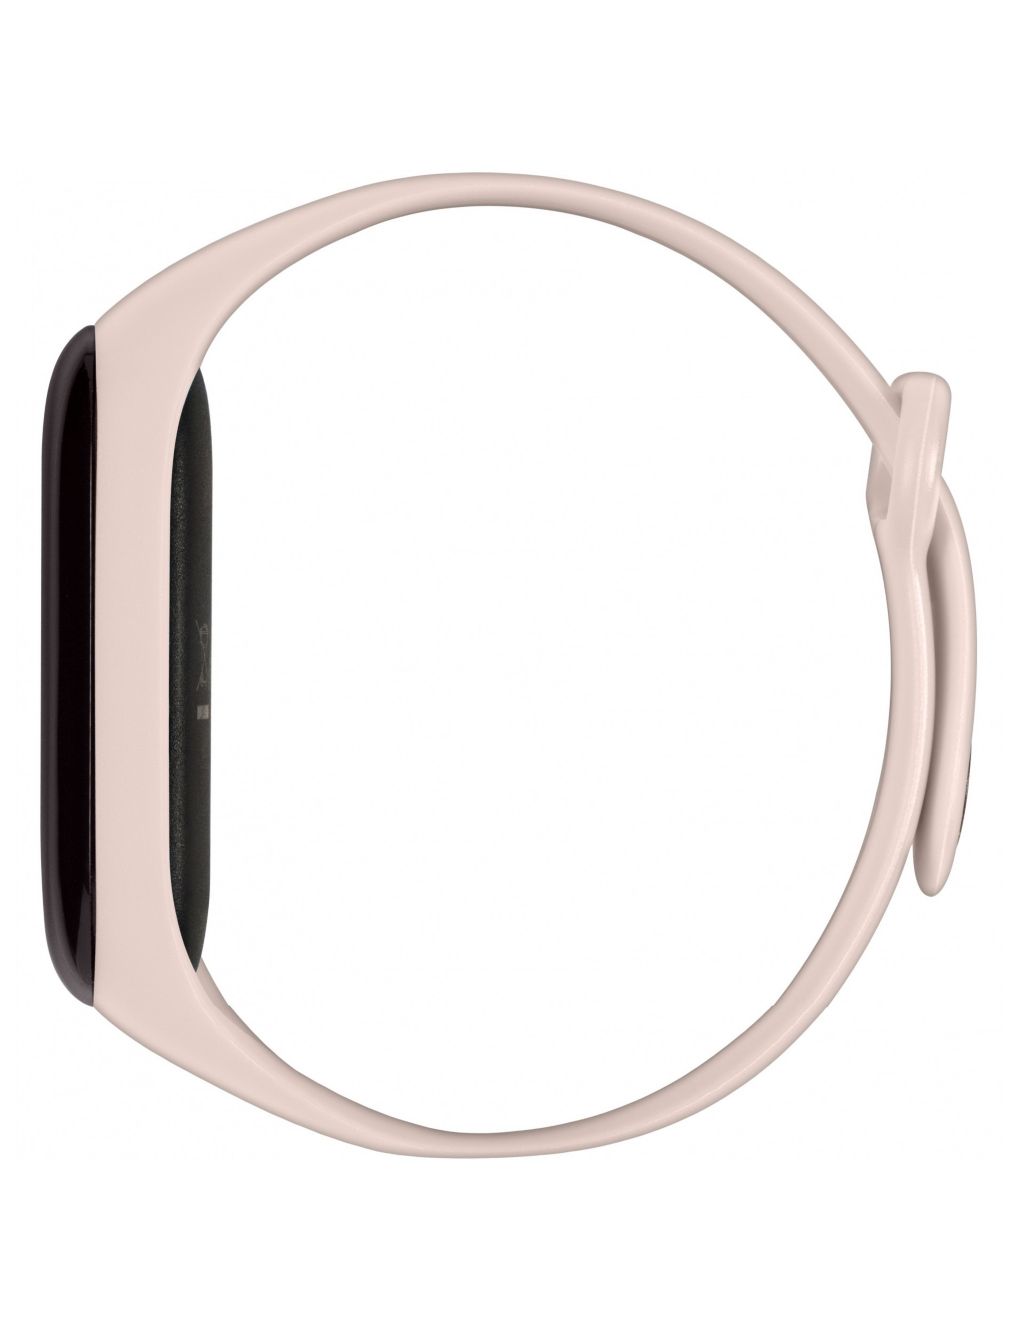 Reflex Active Pink Rubber Smart Watch image 3